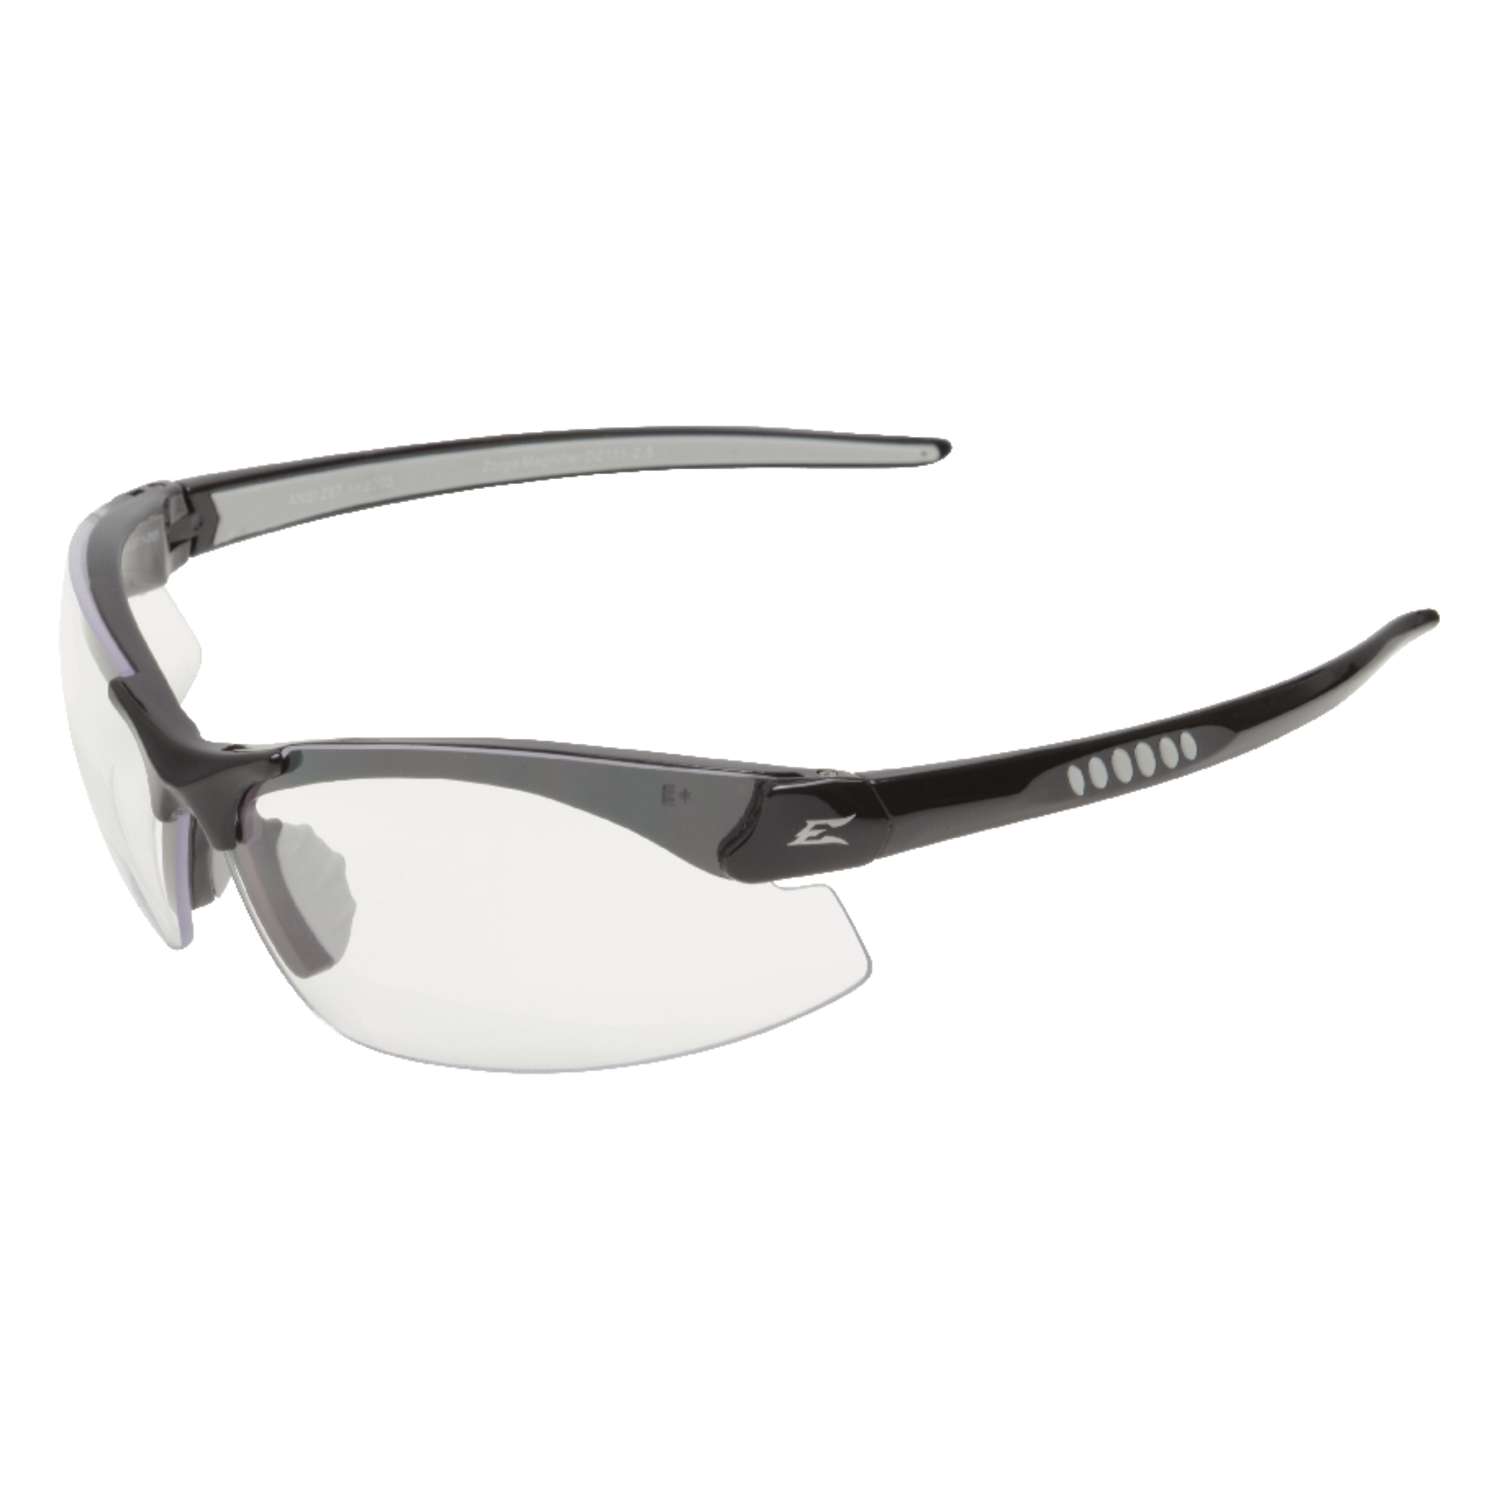 DZ111-G2 Edge Eyewear Zorge G2 Safety Glasses Clear Lens Black Frame 2-PACK 